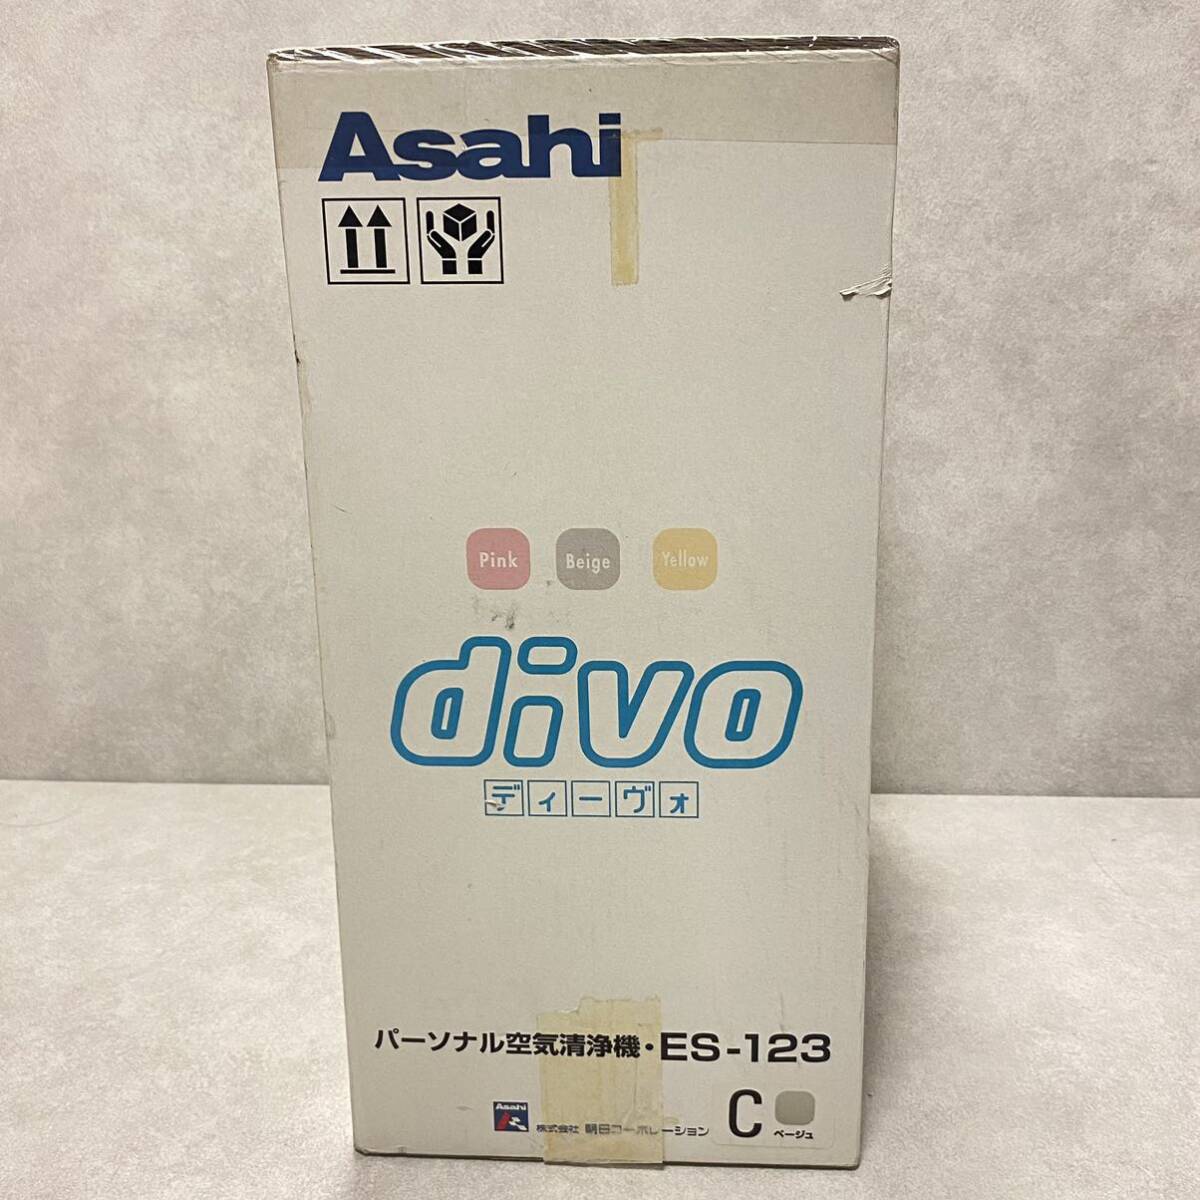 【EW240042】 Asahi パーソナル空気清浄機 ES-123 divo ディーボ_画像4